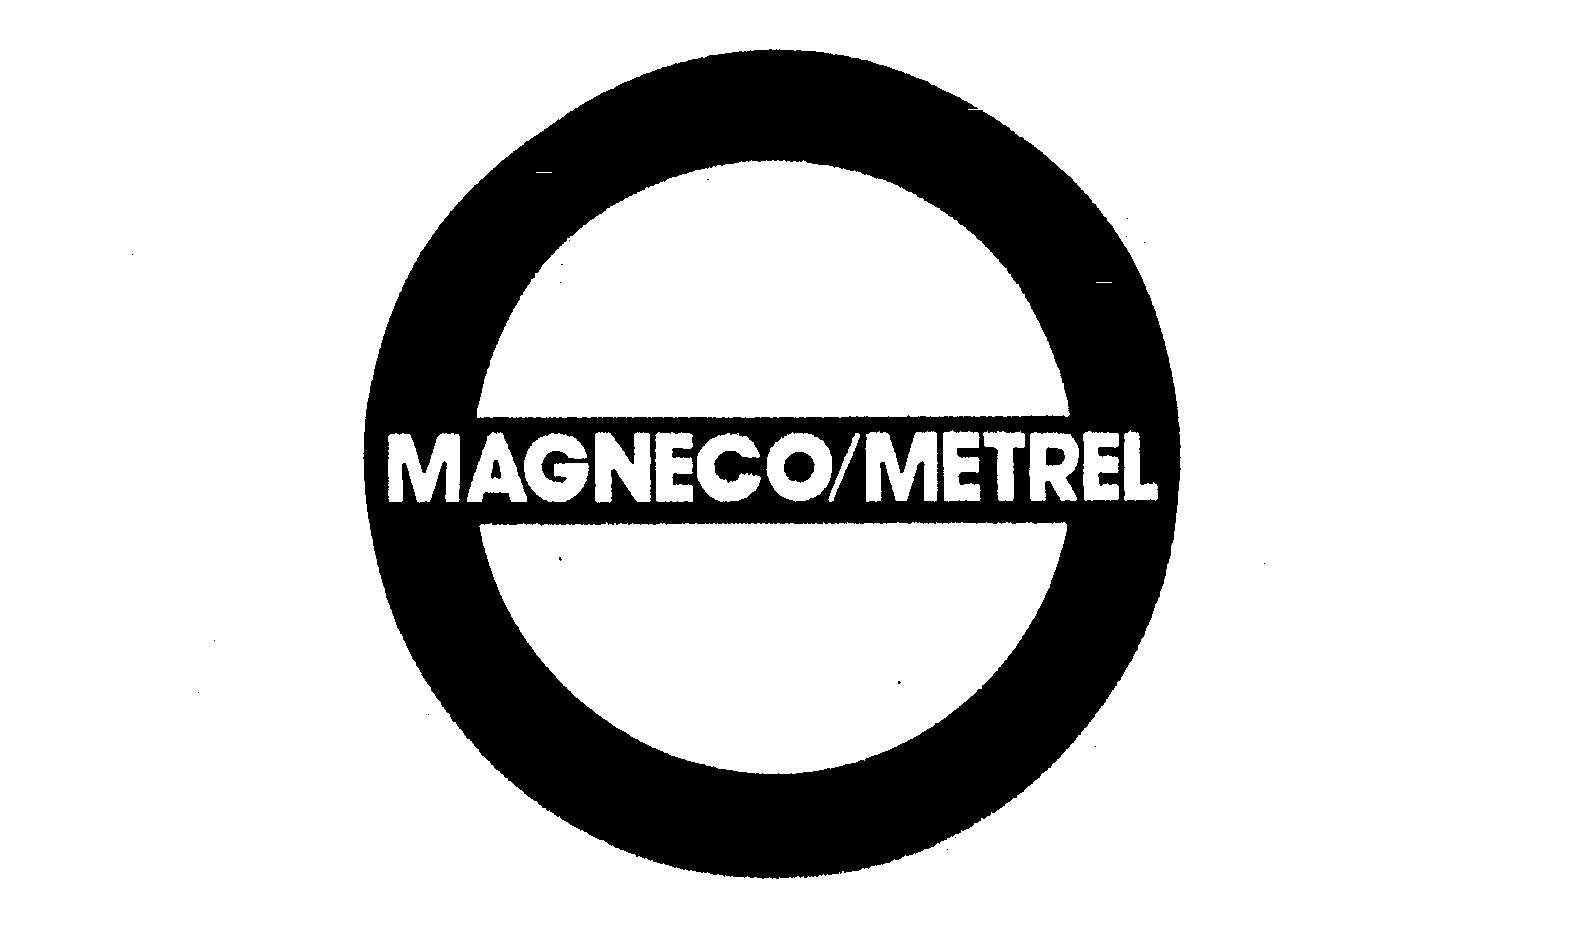  MAGNECO/METREL